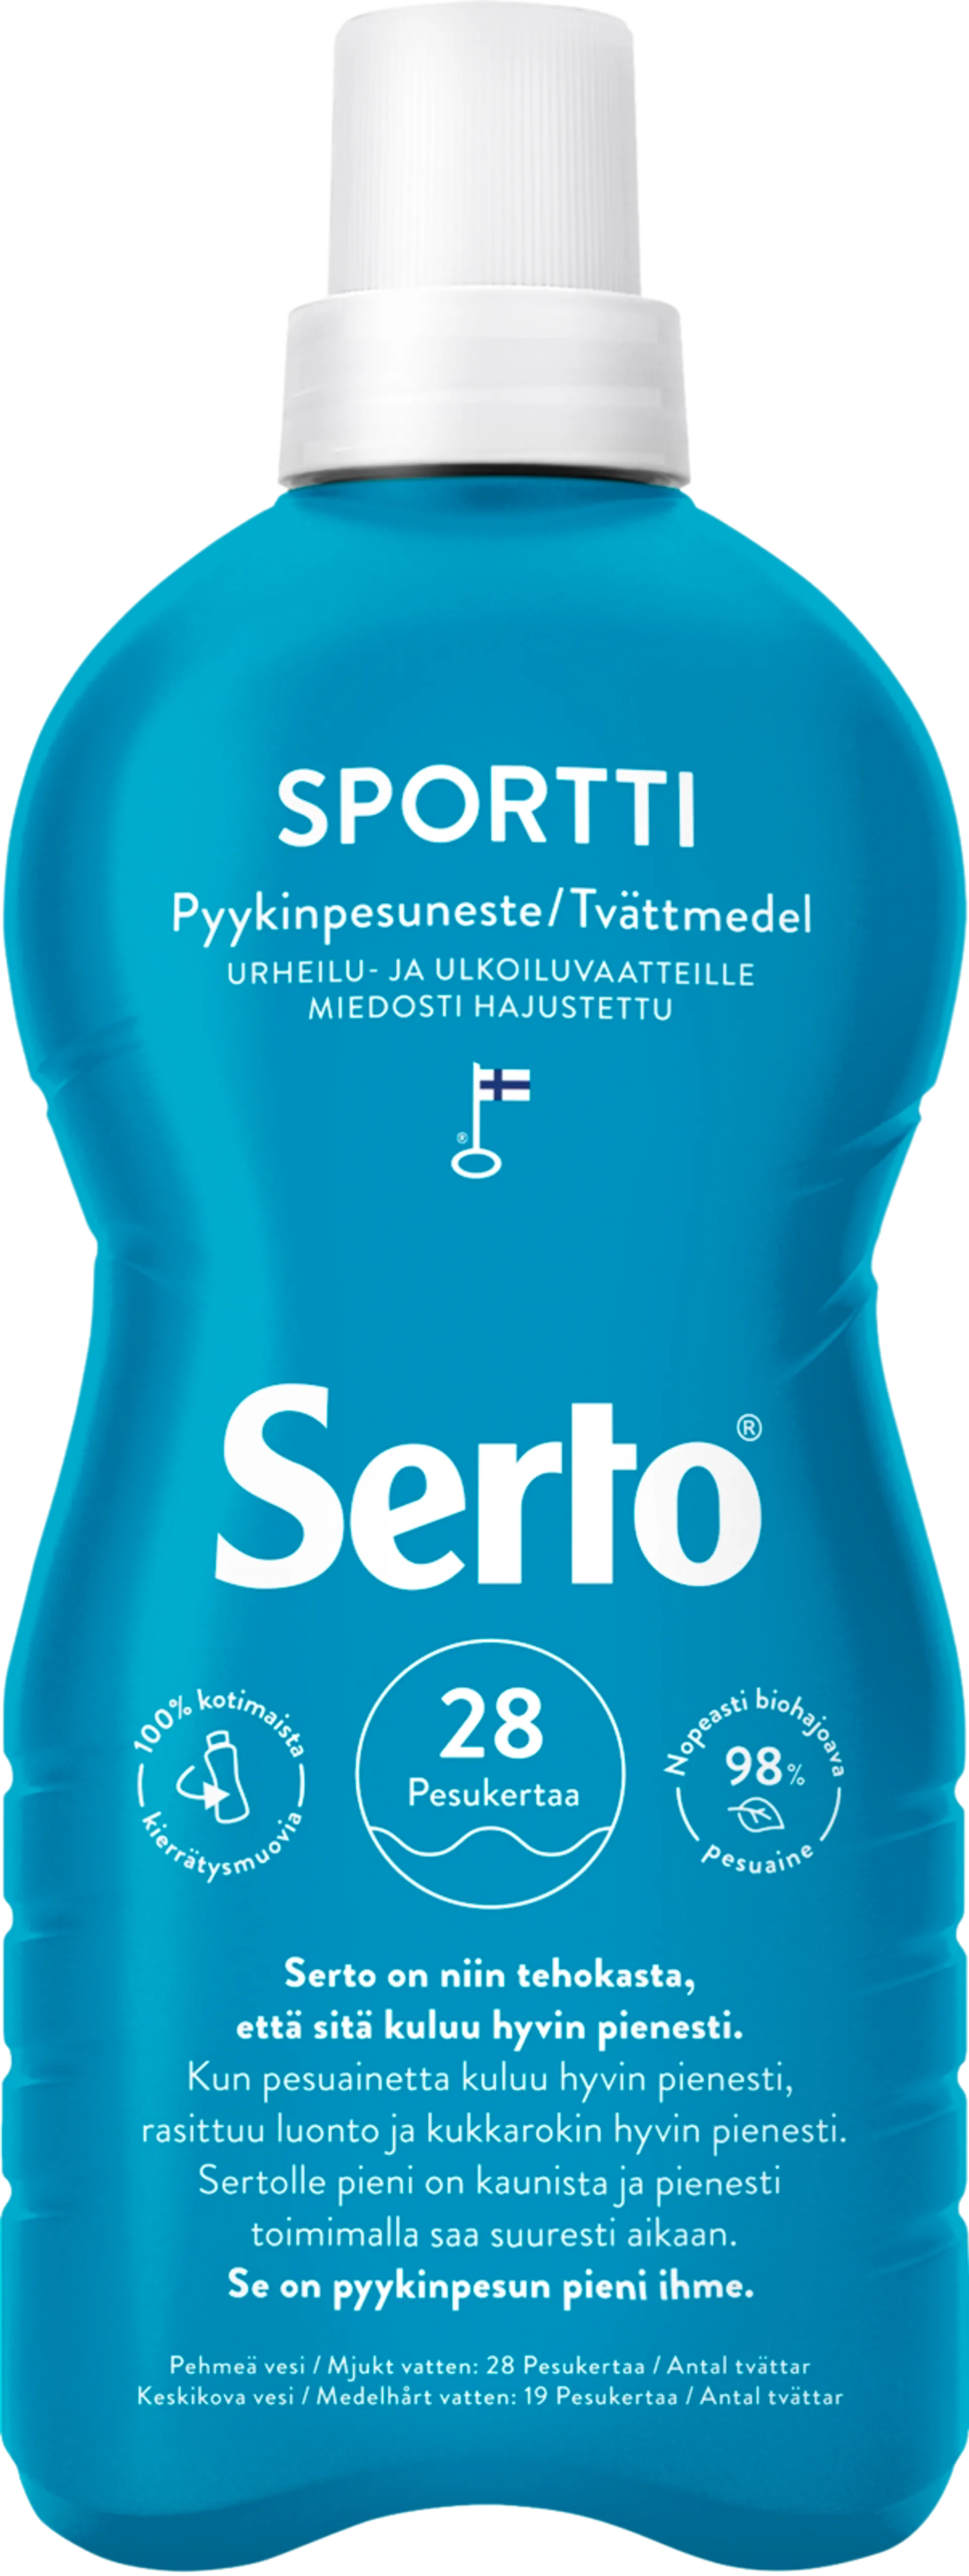 Serto Sportti Pyykinpesuneste 750 ml